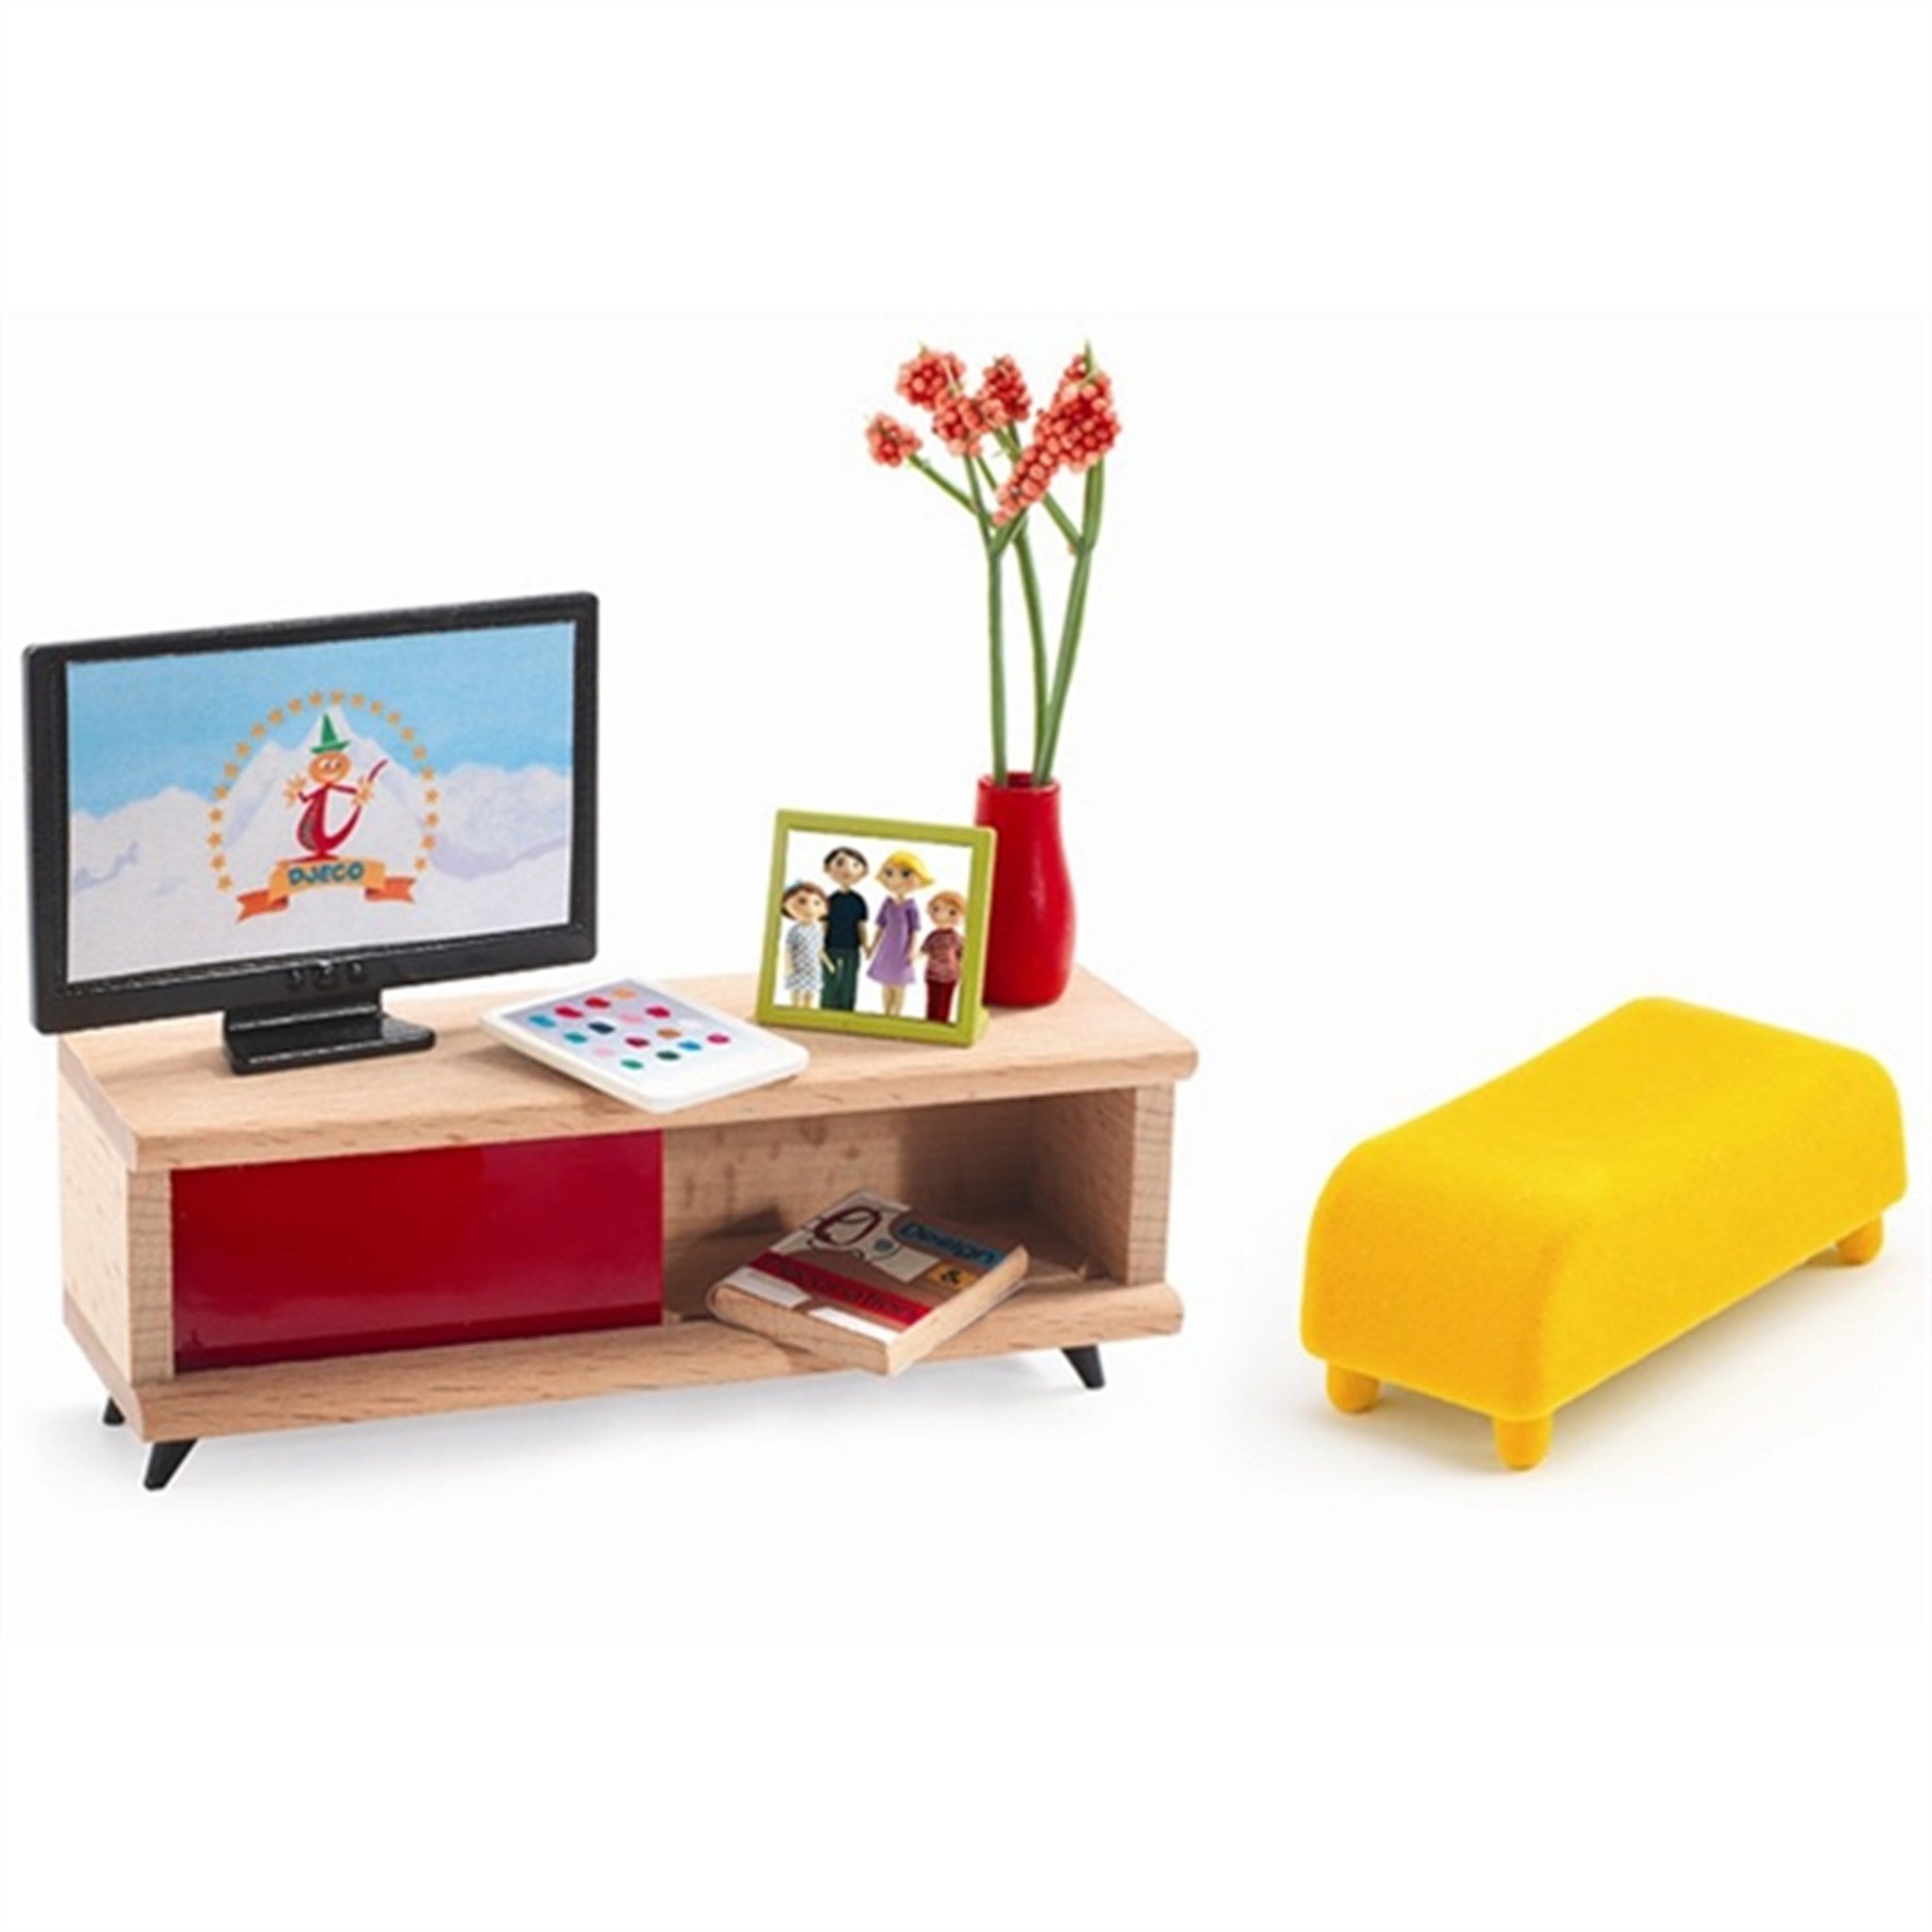 Djeco Petit Home TV Furniture